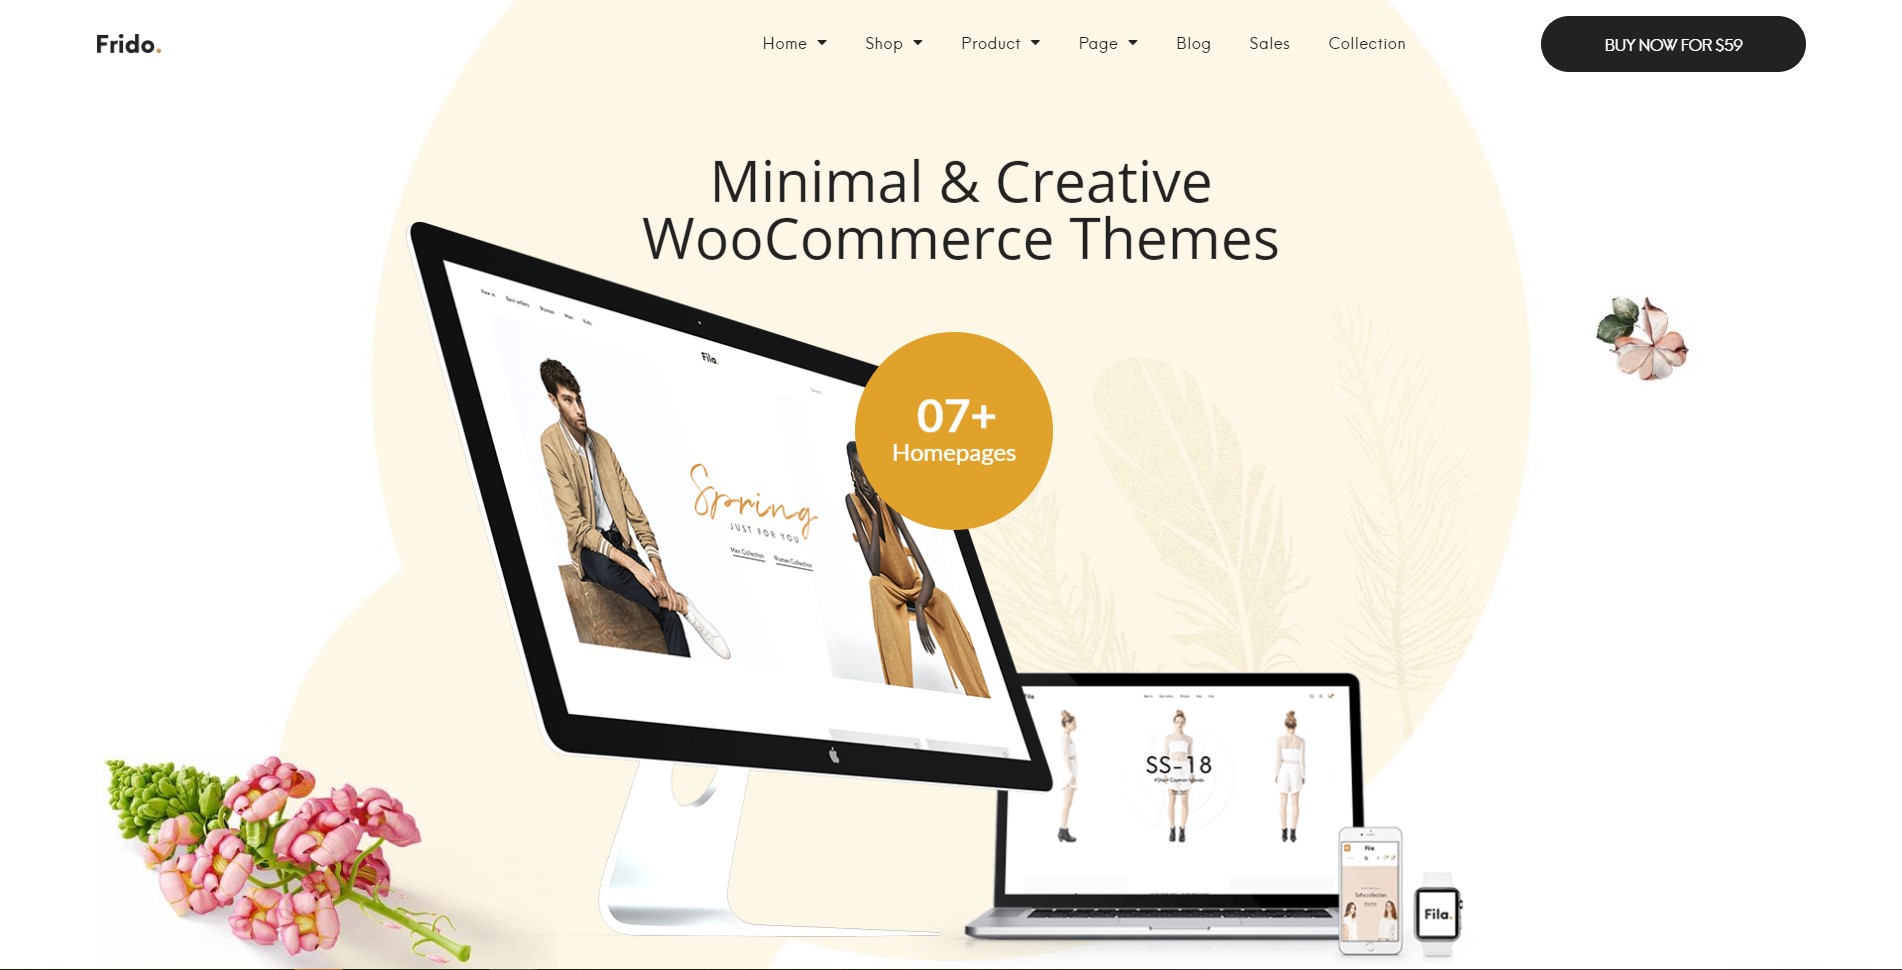 Frido - Minimal & Creative WooCommerce WordPress Theme